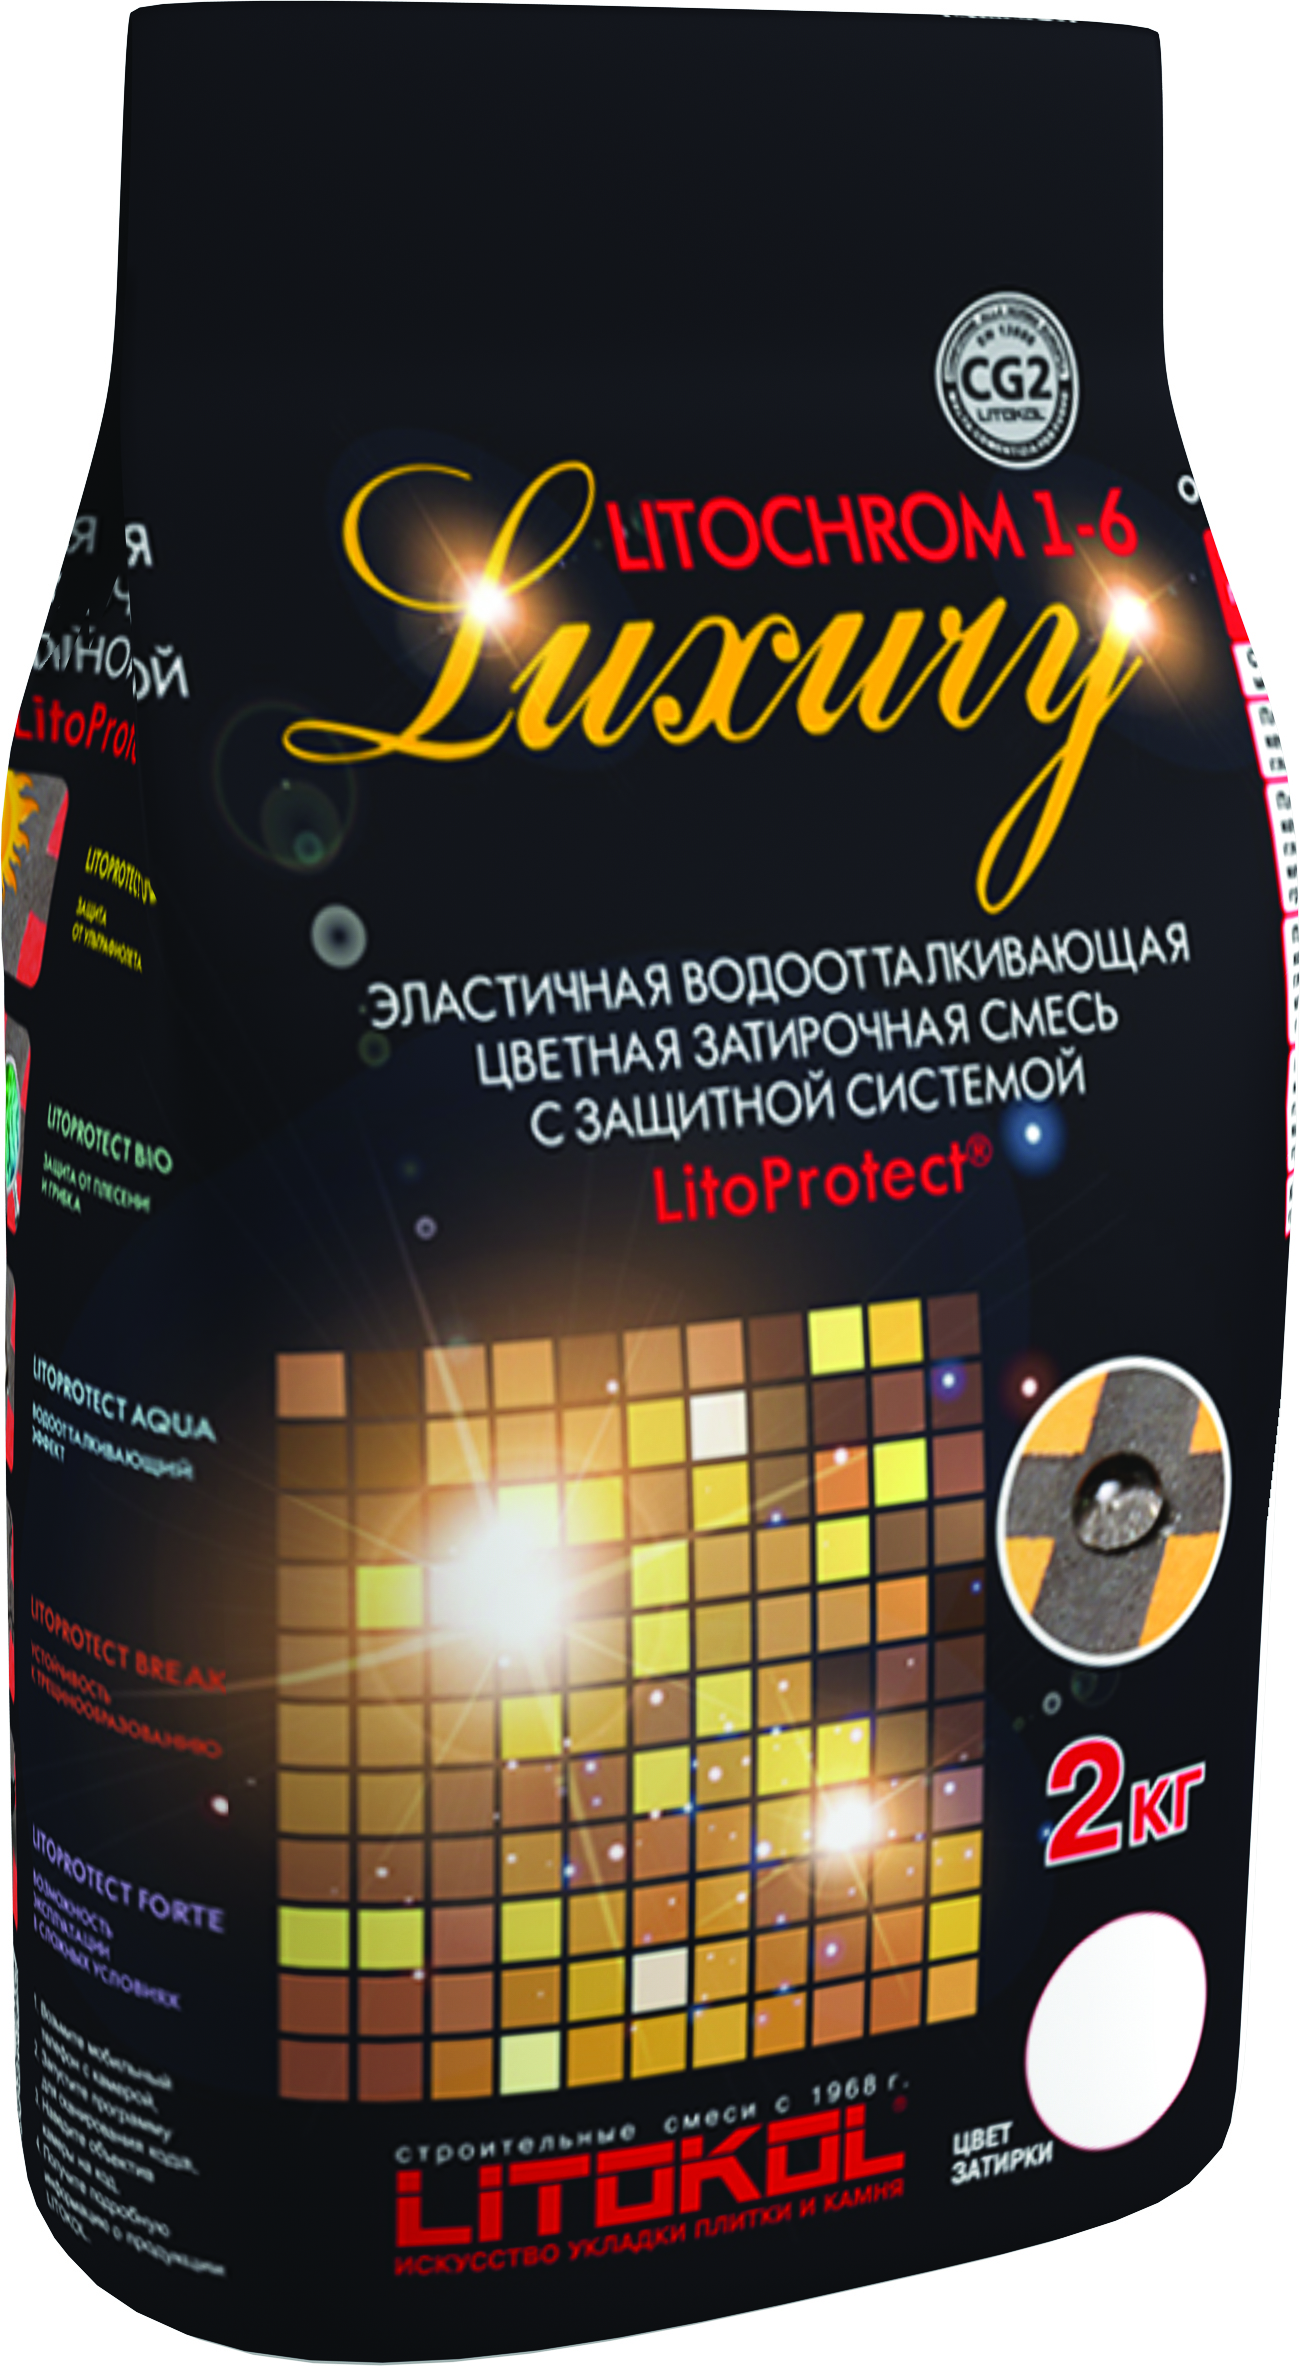 Купить Litokol Litochrom 1-6 Luxury C.600, 2 кг